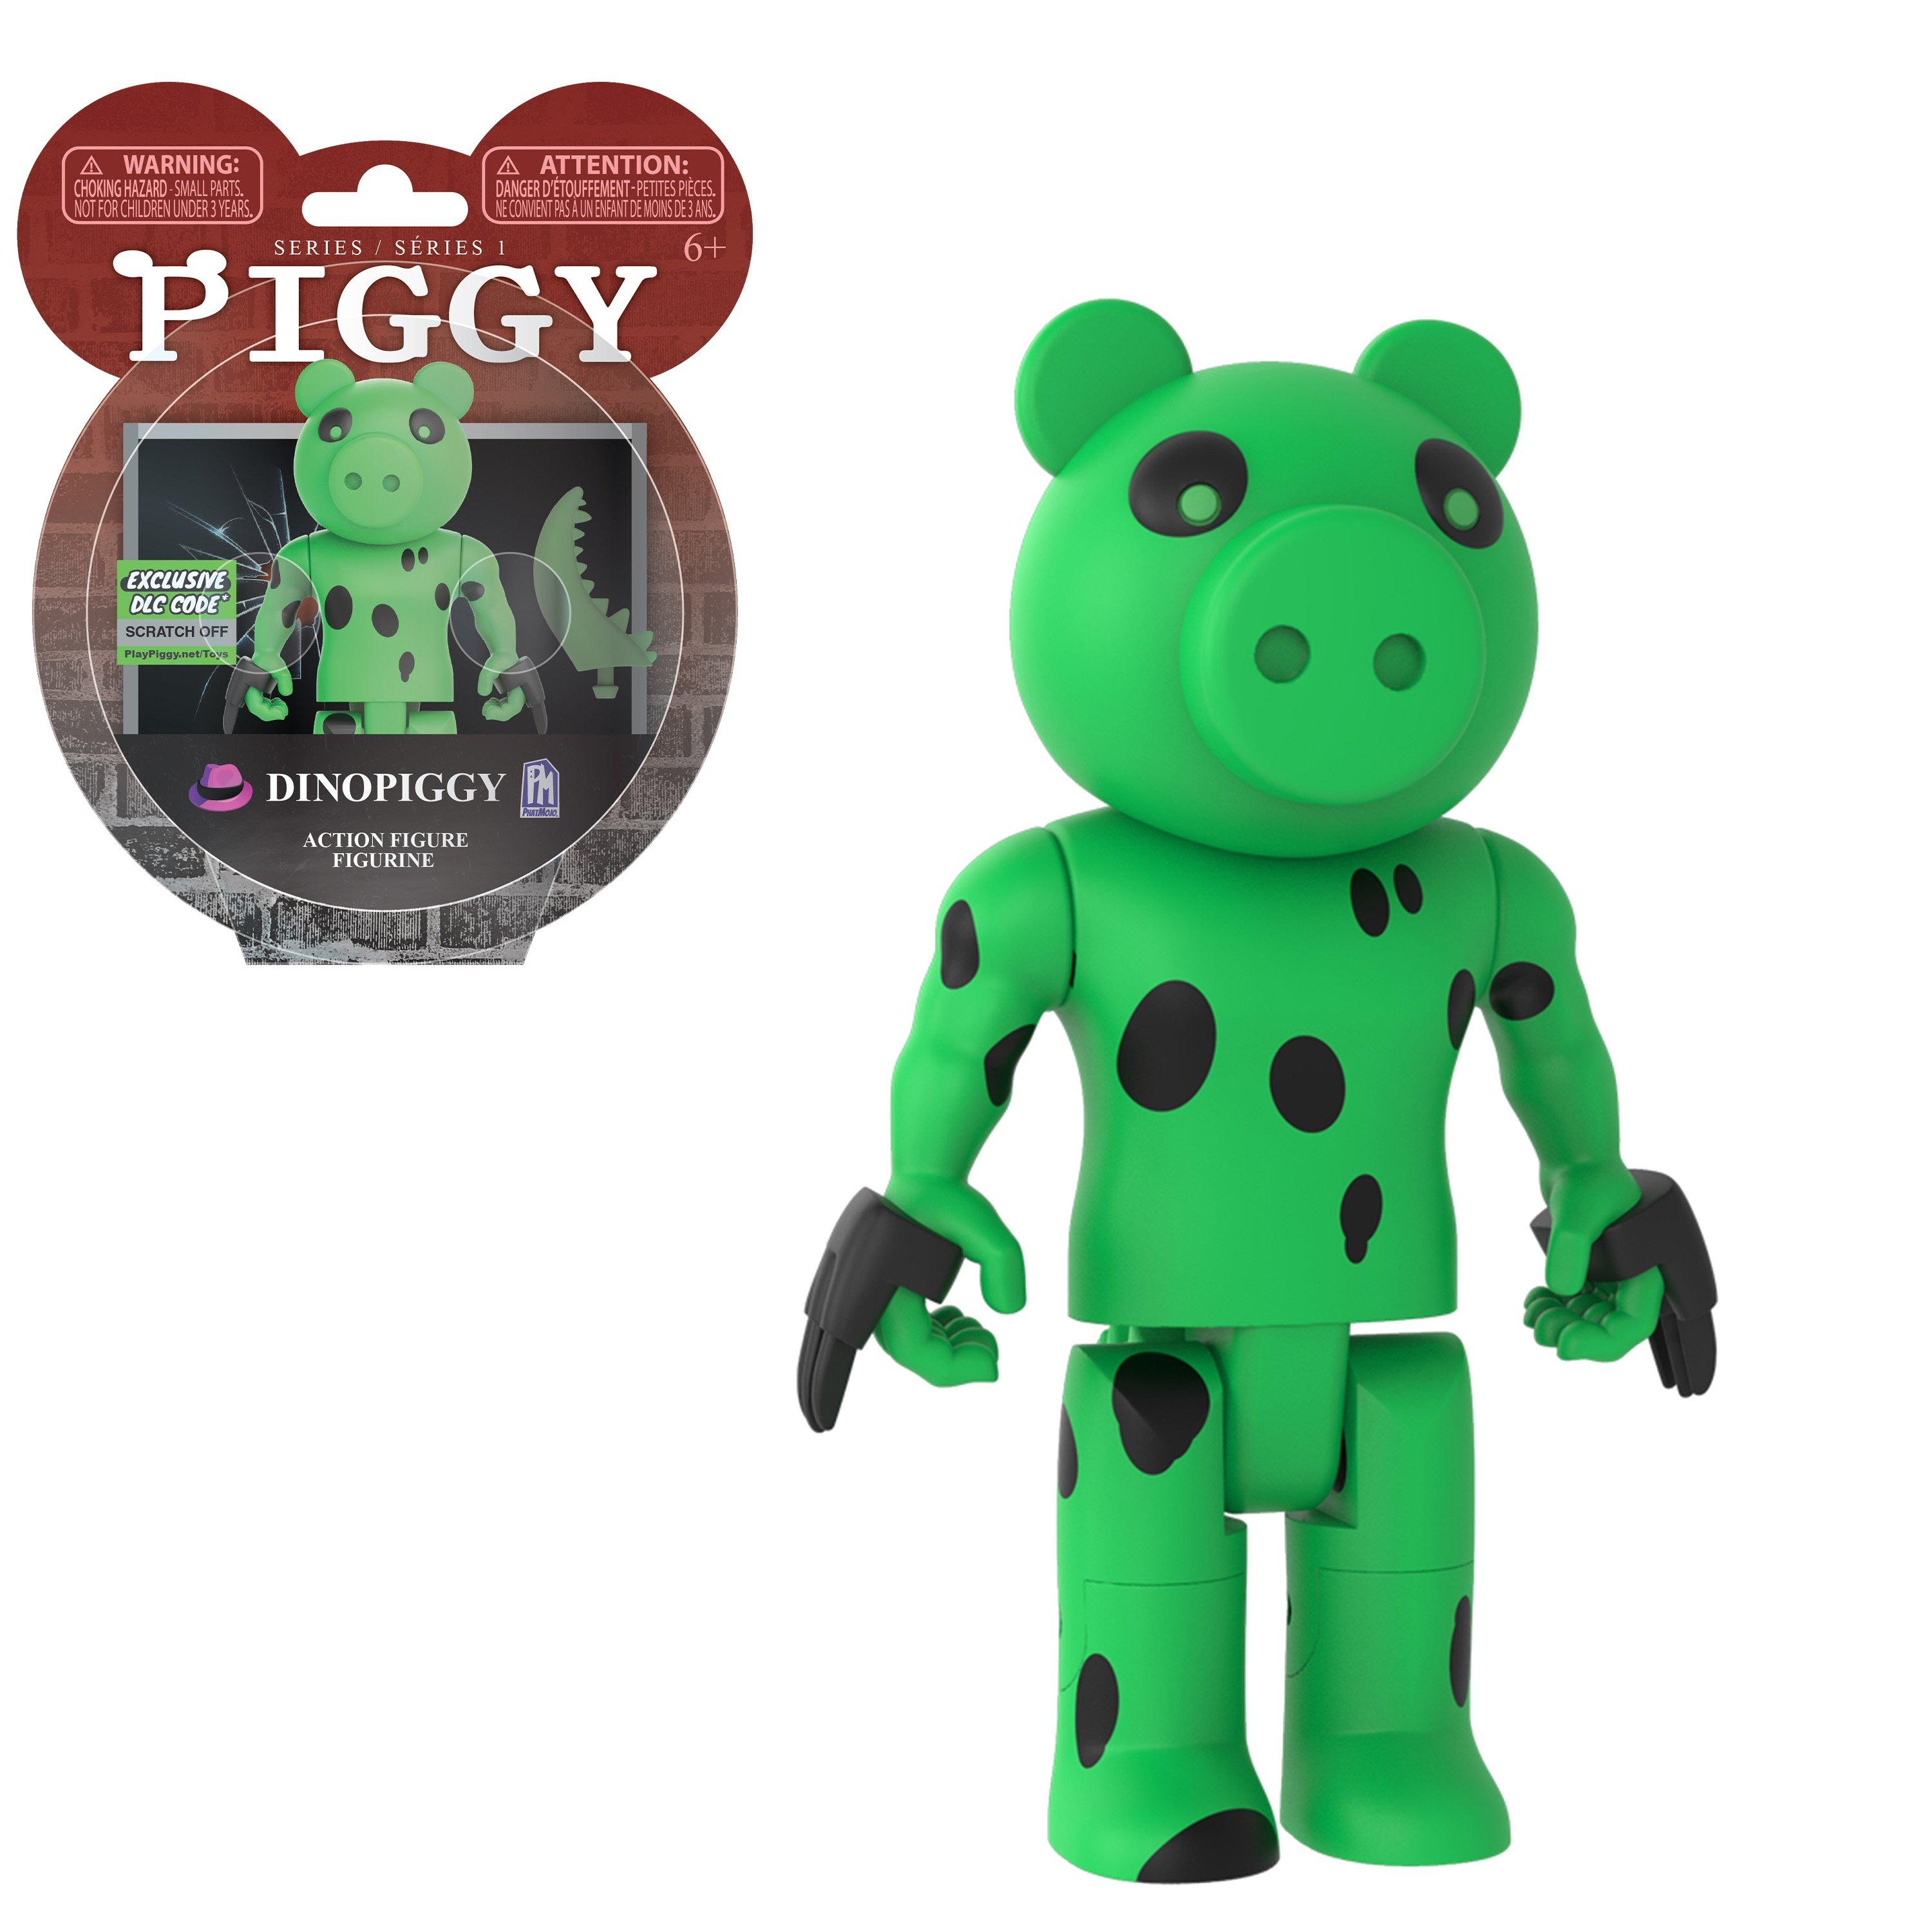 Piggy Dinopiggy Series 1 Action Figure Gamestop - codes for piggy roblox